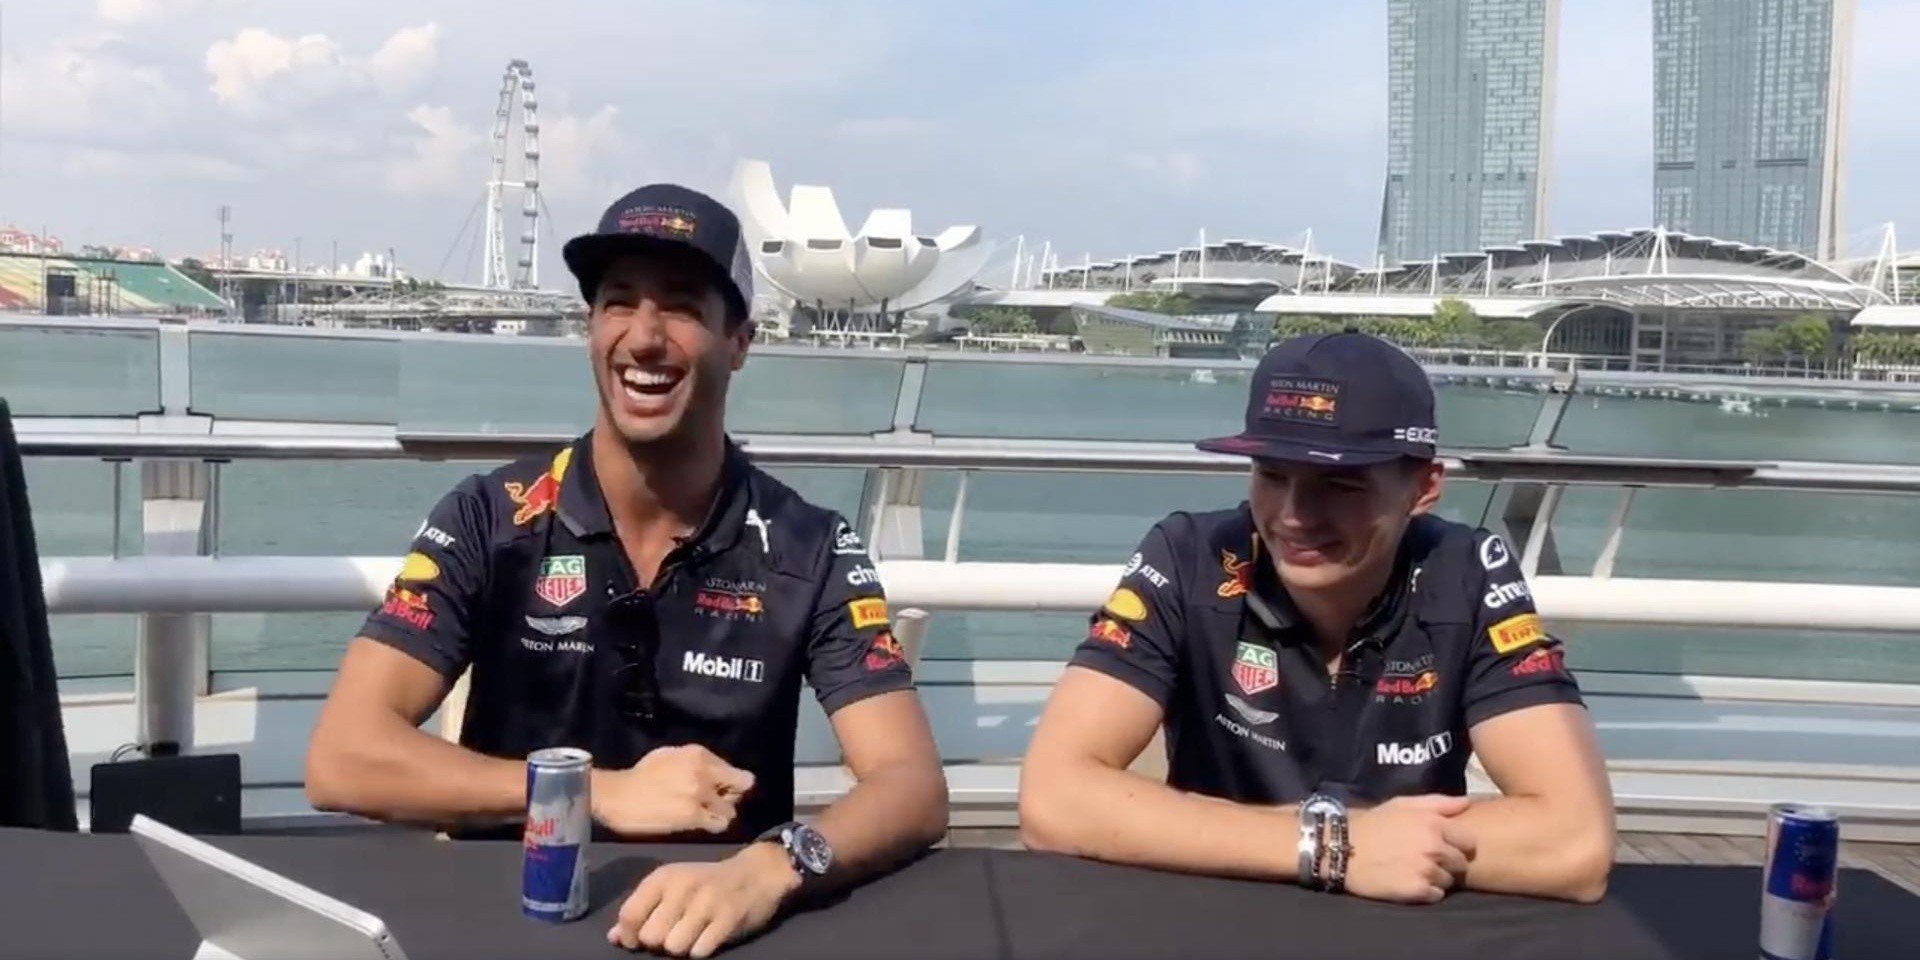 Red Bull drivers react to Singaporean music | Bandwagon | Music media